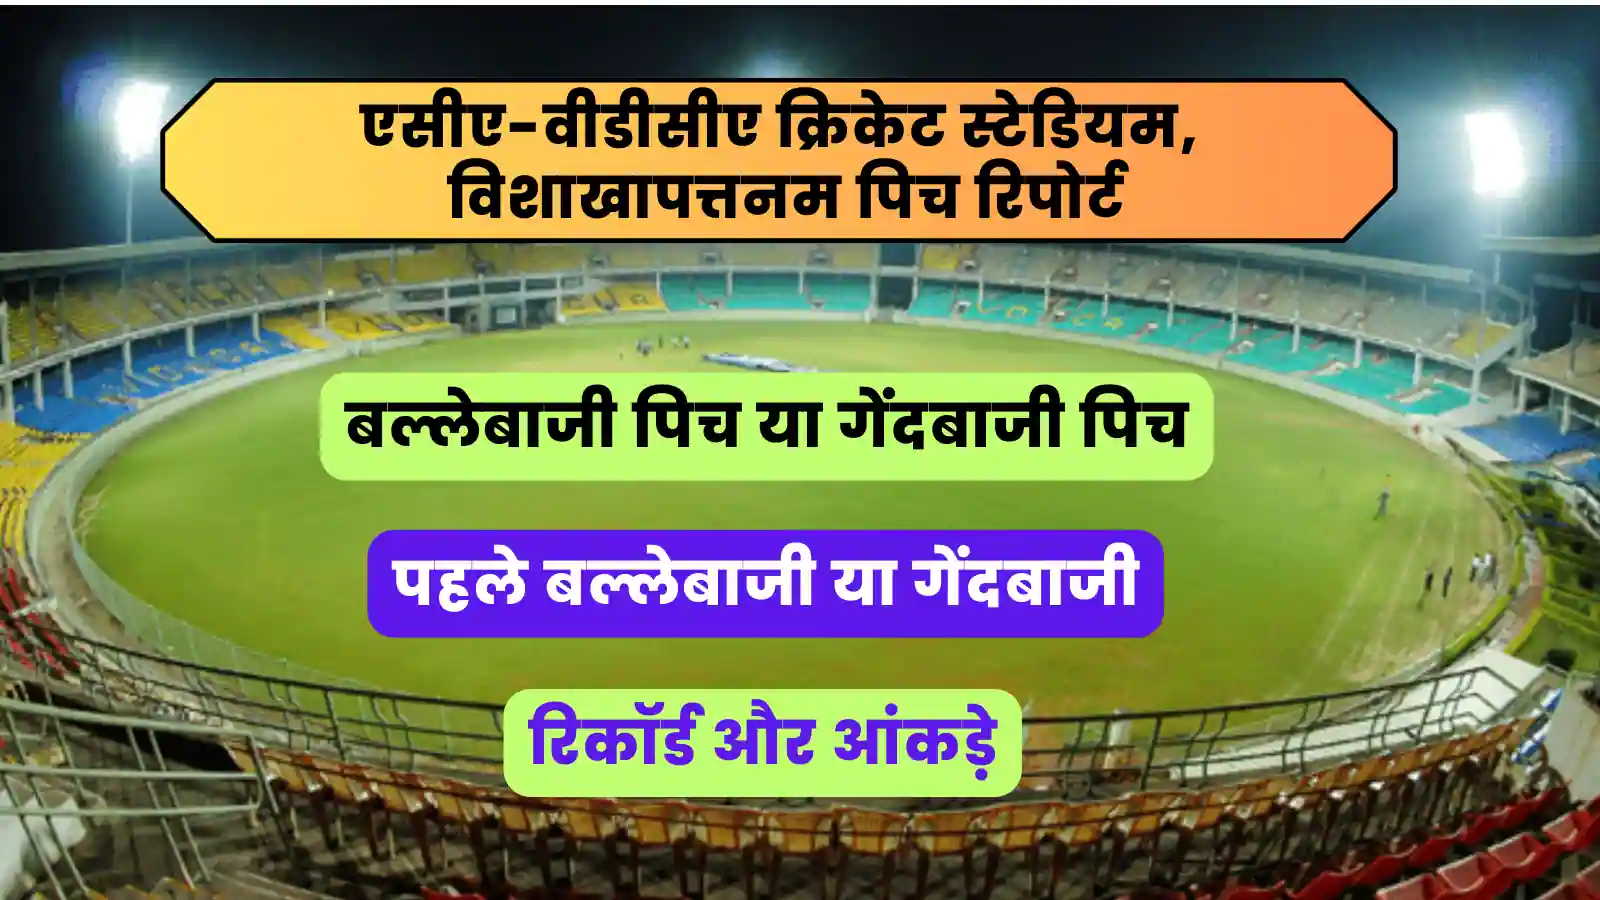 Dr. Y.S. Rajasekhara Reddy ACA-VDCA Cricket Stadium Pitch Report In Hindi